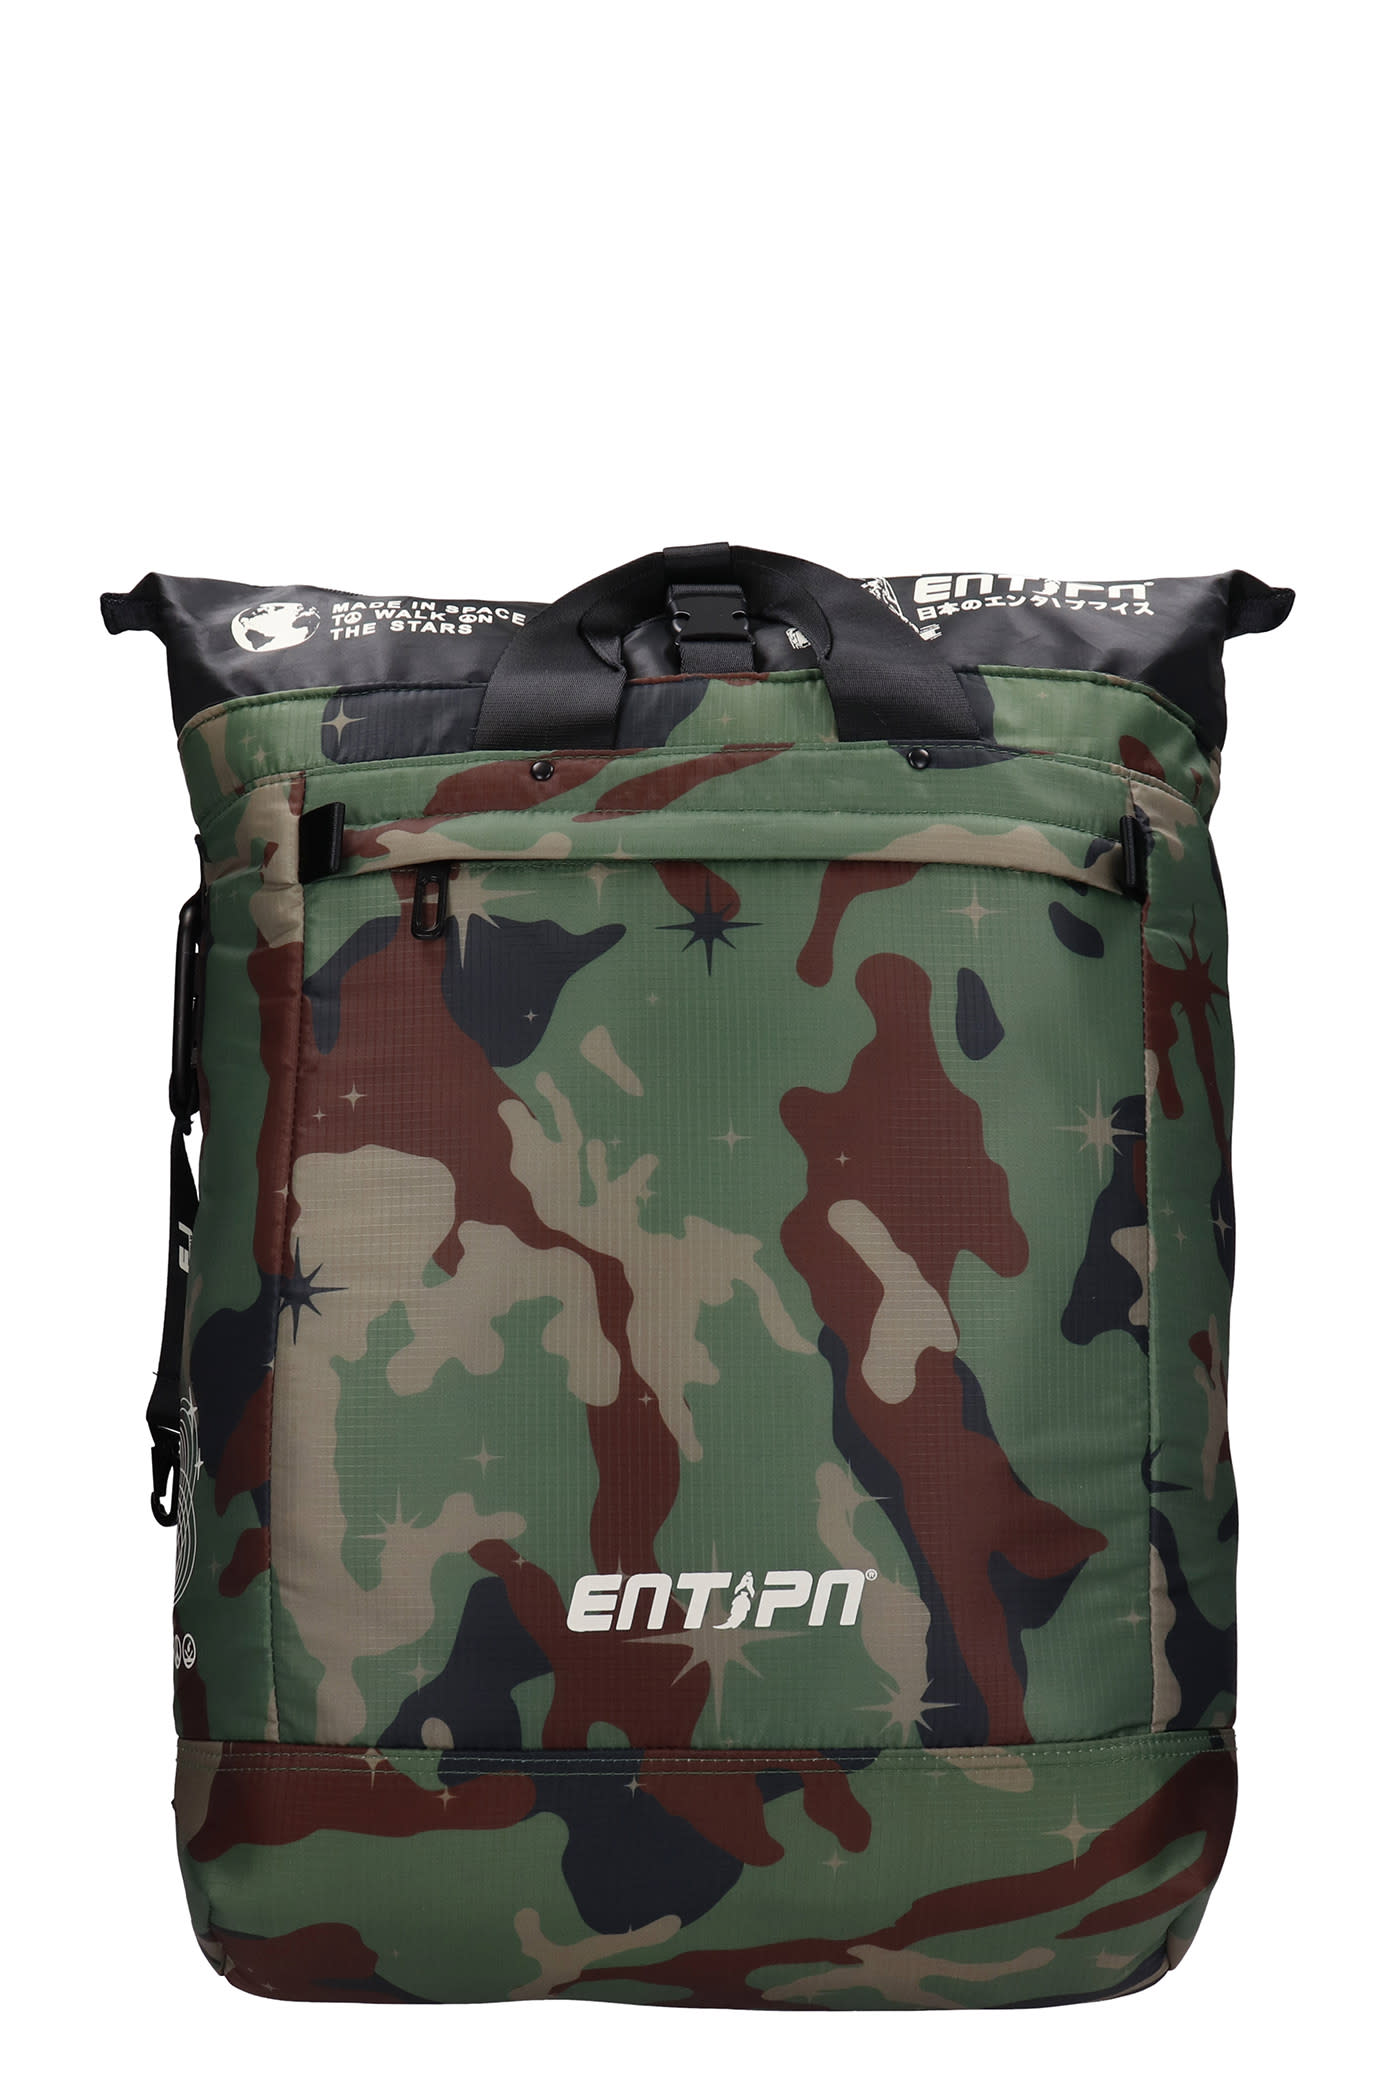 Enterprise Japan Backpack In Camouflage Nylon